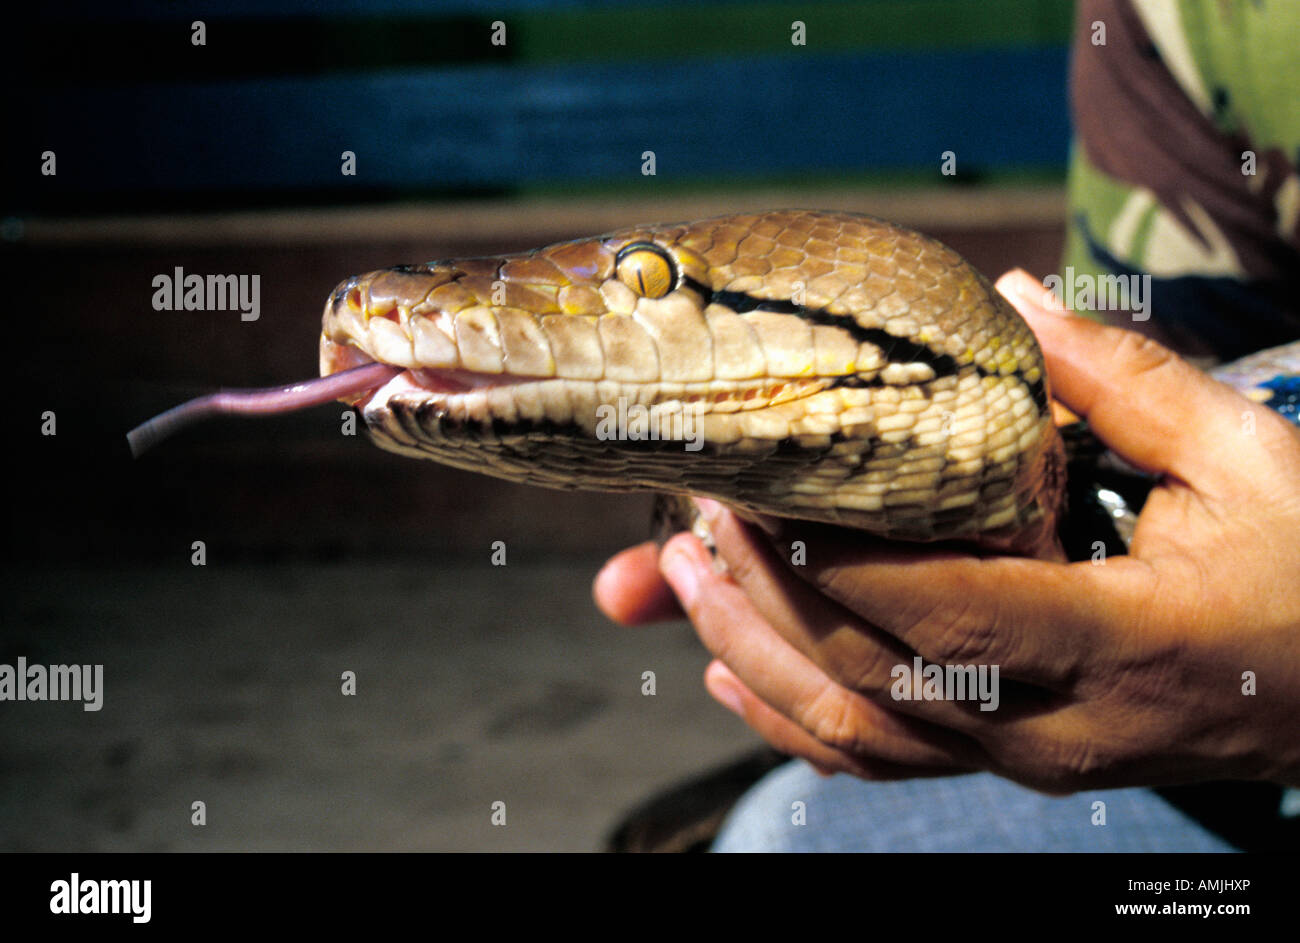 Netzpython indonesien familly with tame Reticulated Python Python reticulatus animals exotische Haustiere Haustiere house pets K Stock Photo